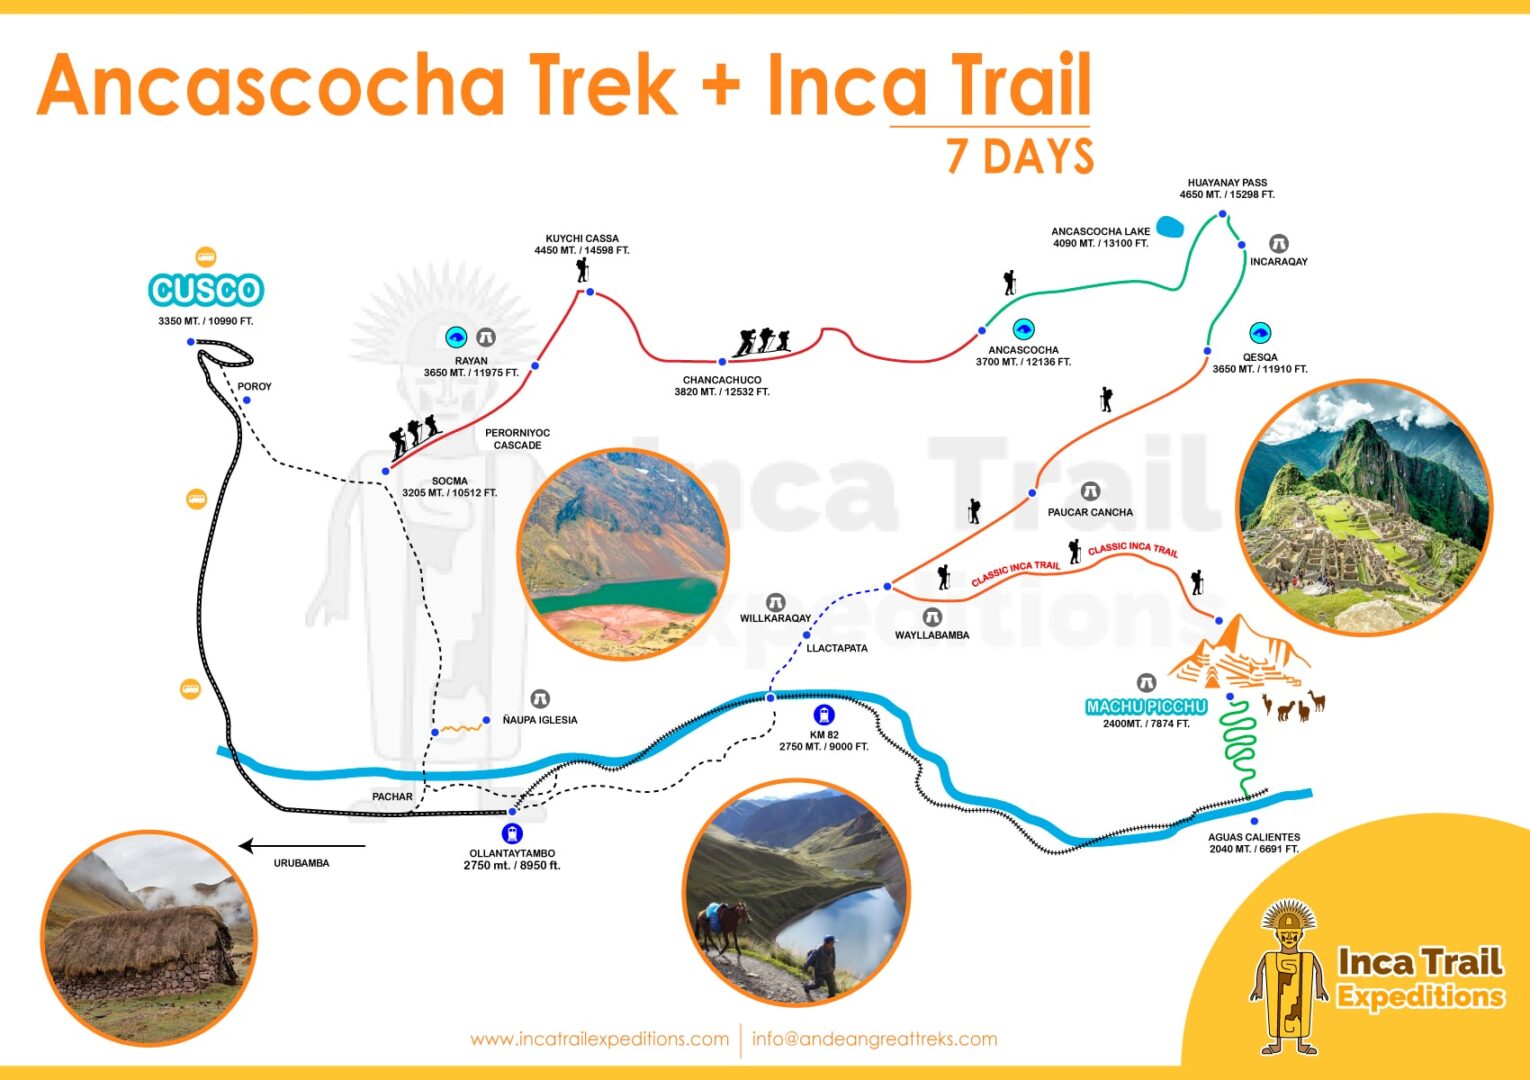 ANCASCOCHA-TREK-INCA-TRAIL-7-DAYS-BY-INCA-TRAIL-EXPEDITIONS